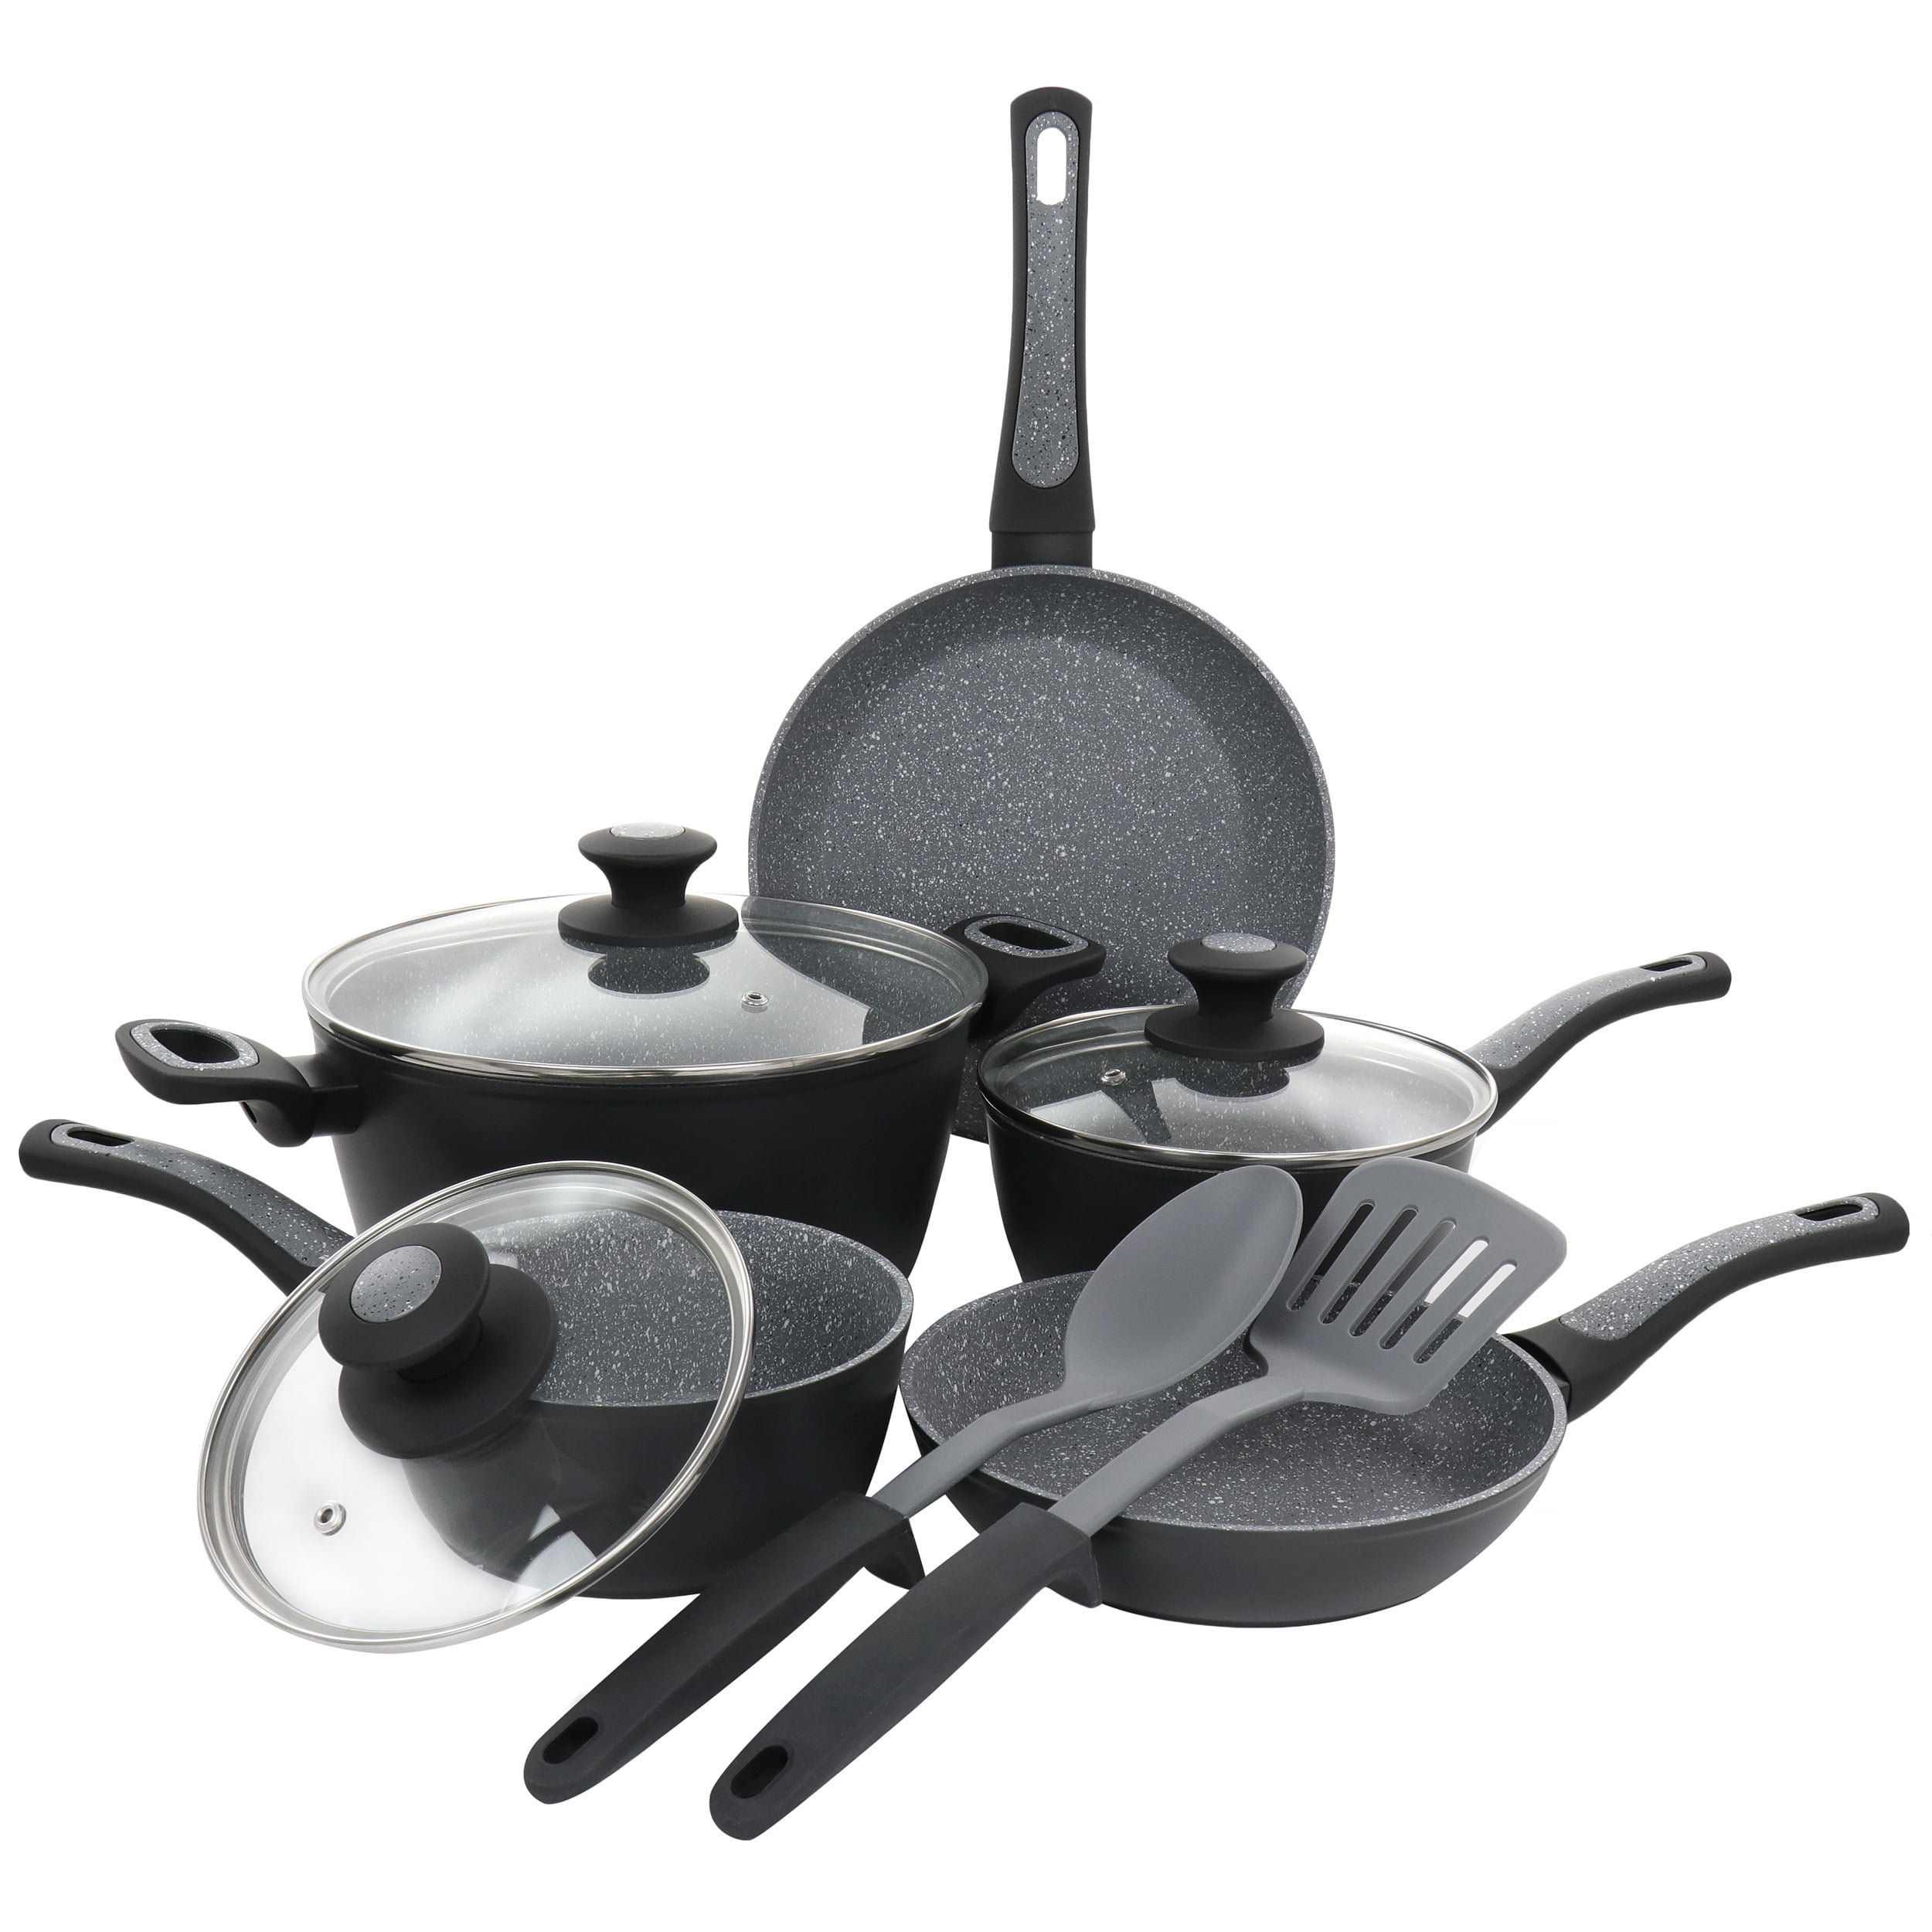 T-fal C517SA64 Pro Grade 10 Piece Cookware Set, Black - 9913208